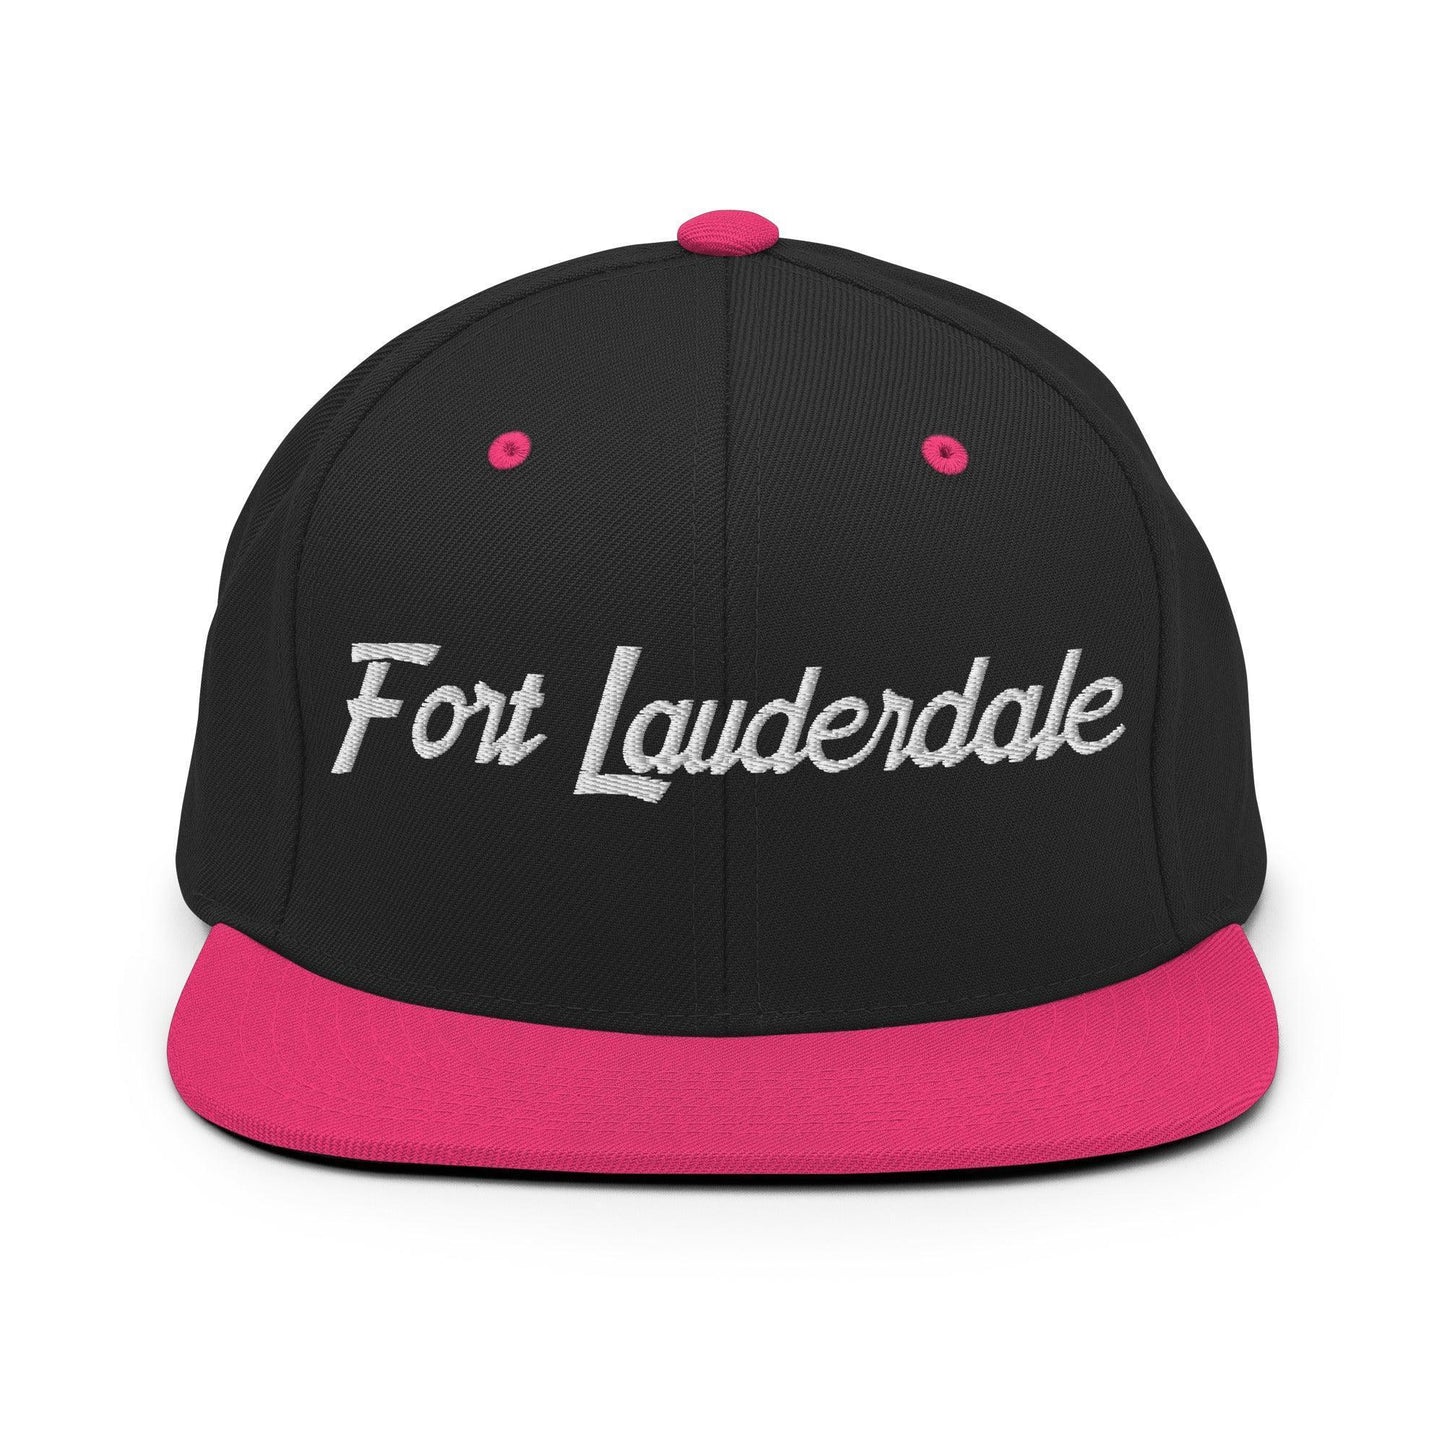 Fort Lauderdale Script Snapback Hat Black Neon Pink